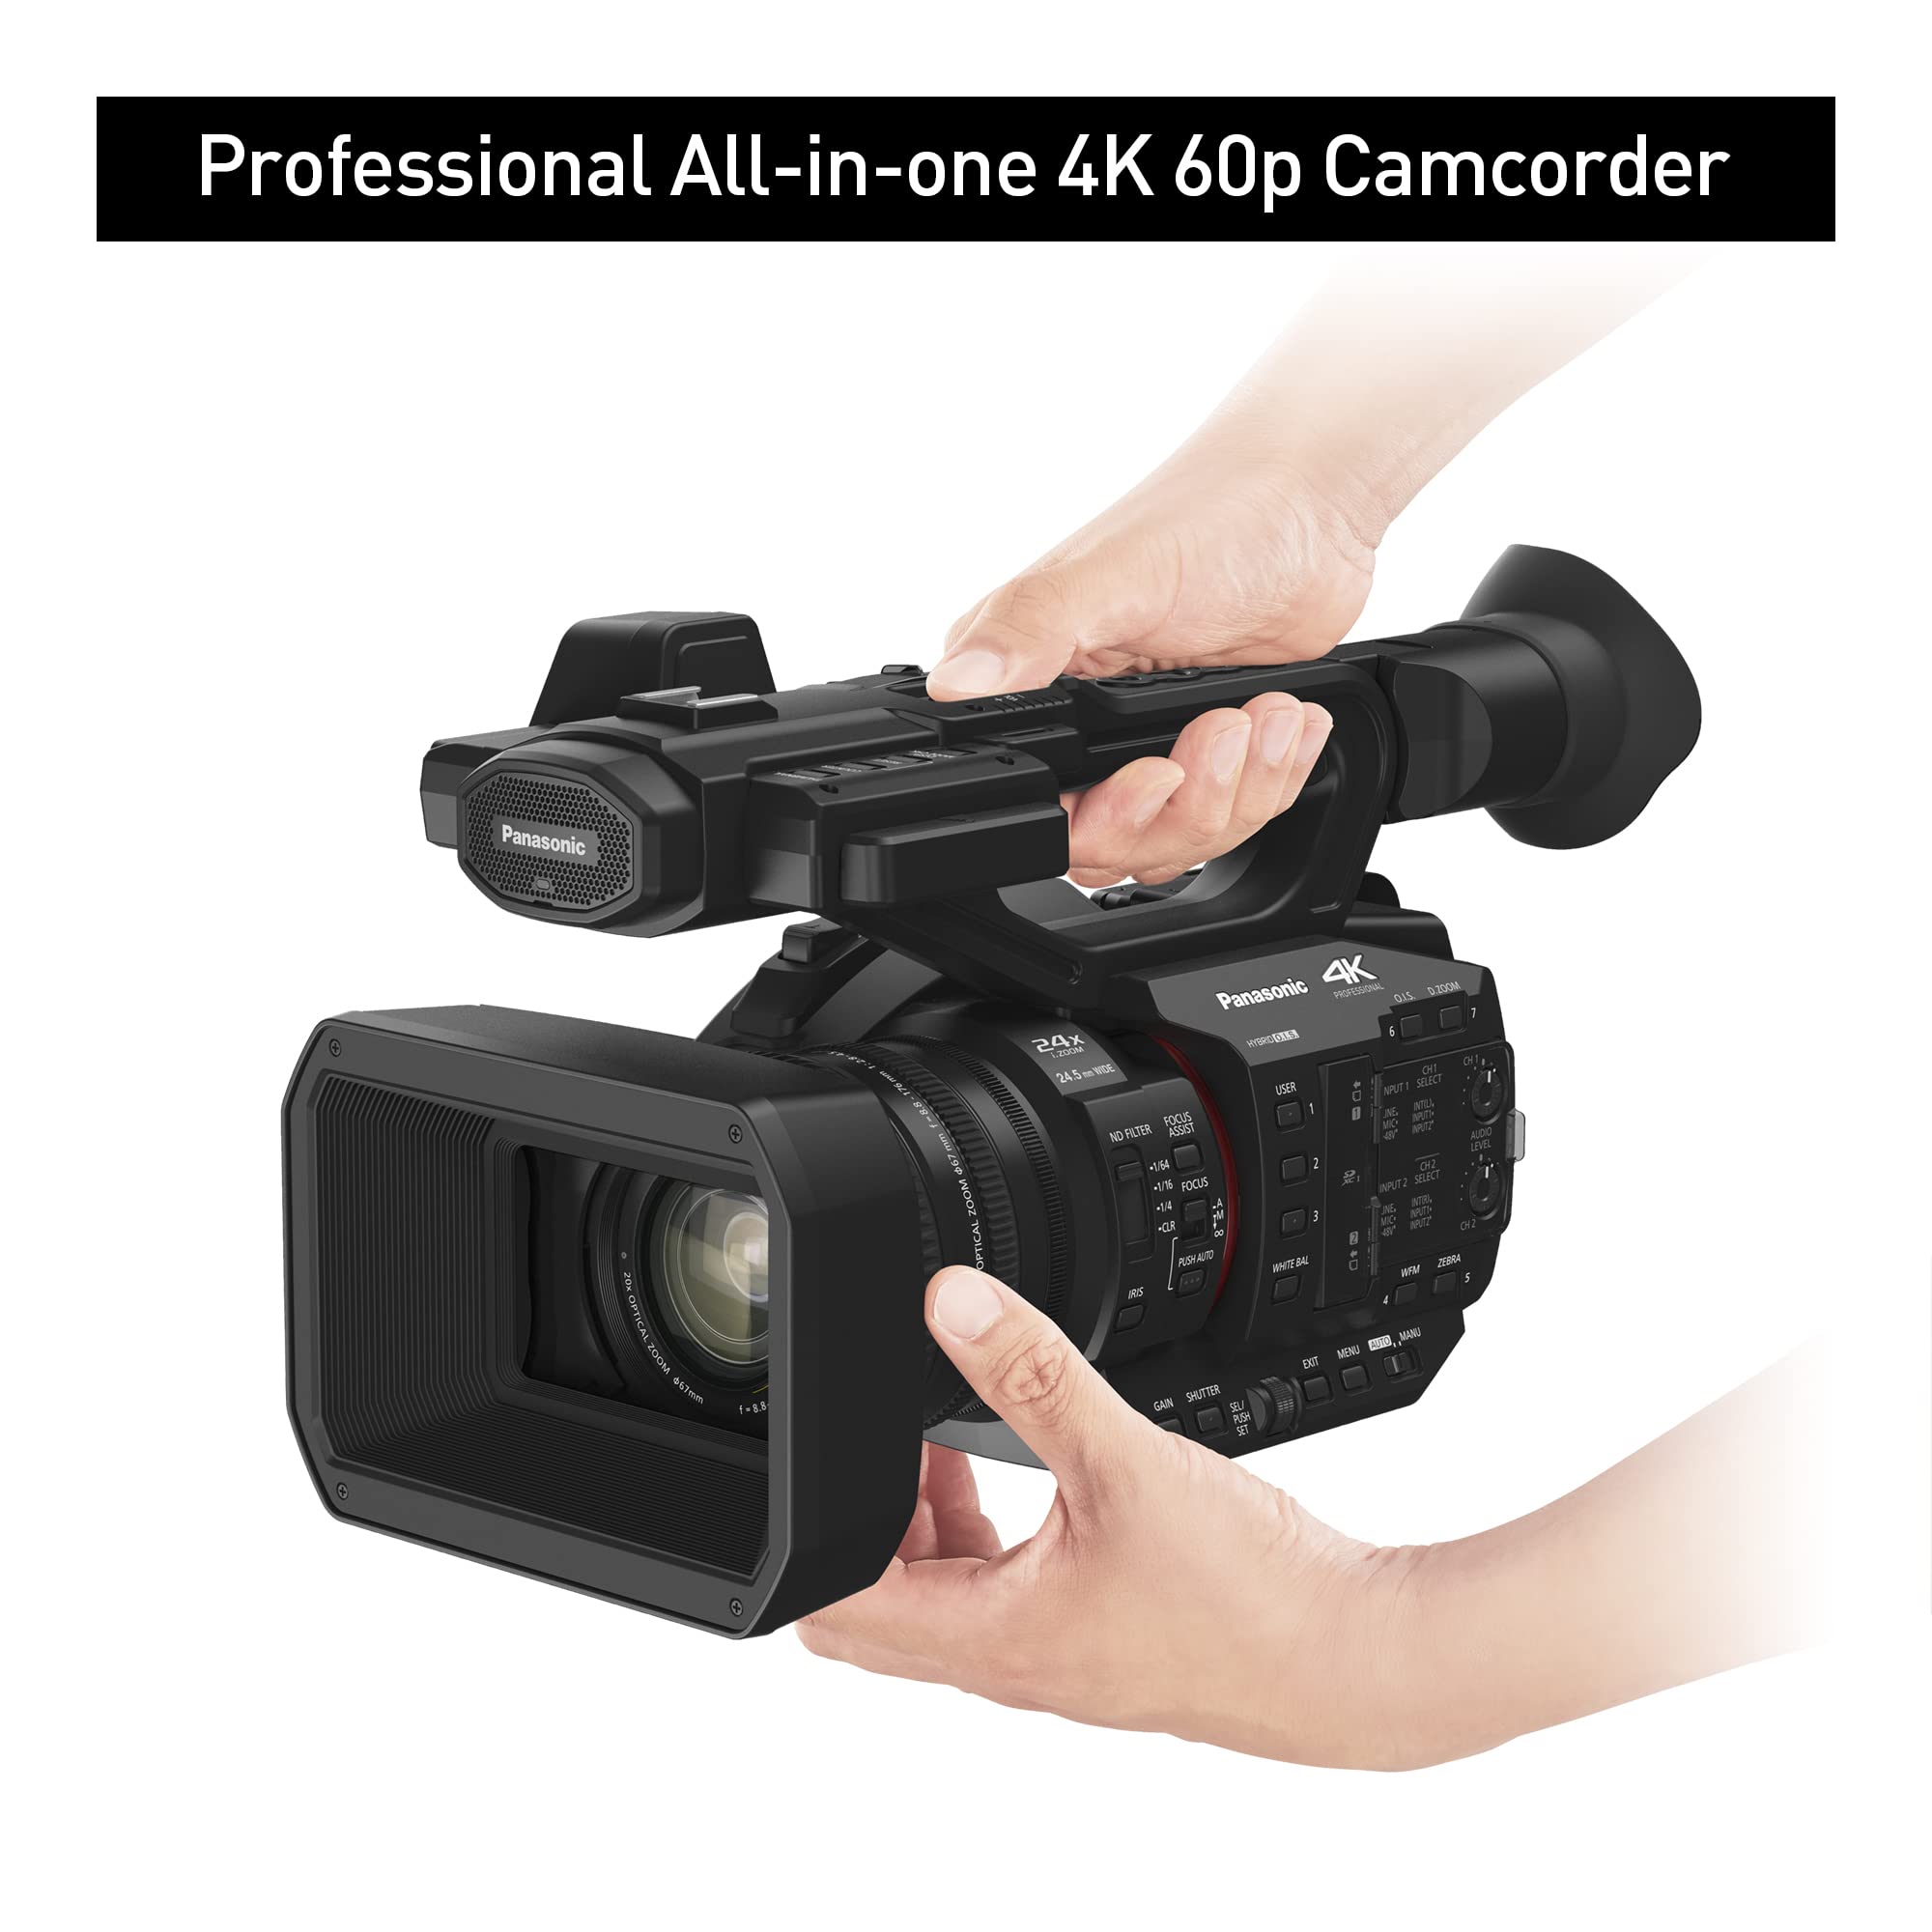 Panasonic HC-X20 Camcorder, 4K 60p, 1.0-inch Sensor, 24.5mm Wide-Angle Lens and Optical 20x Zoom